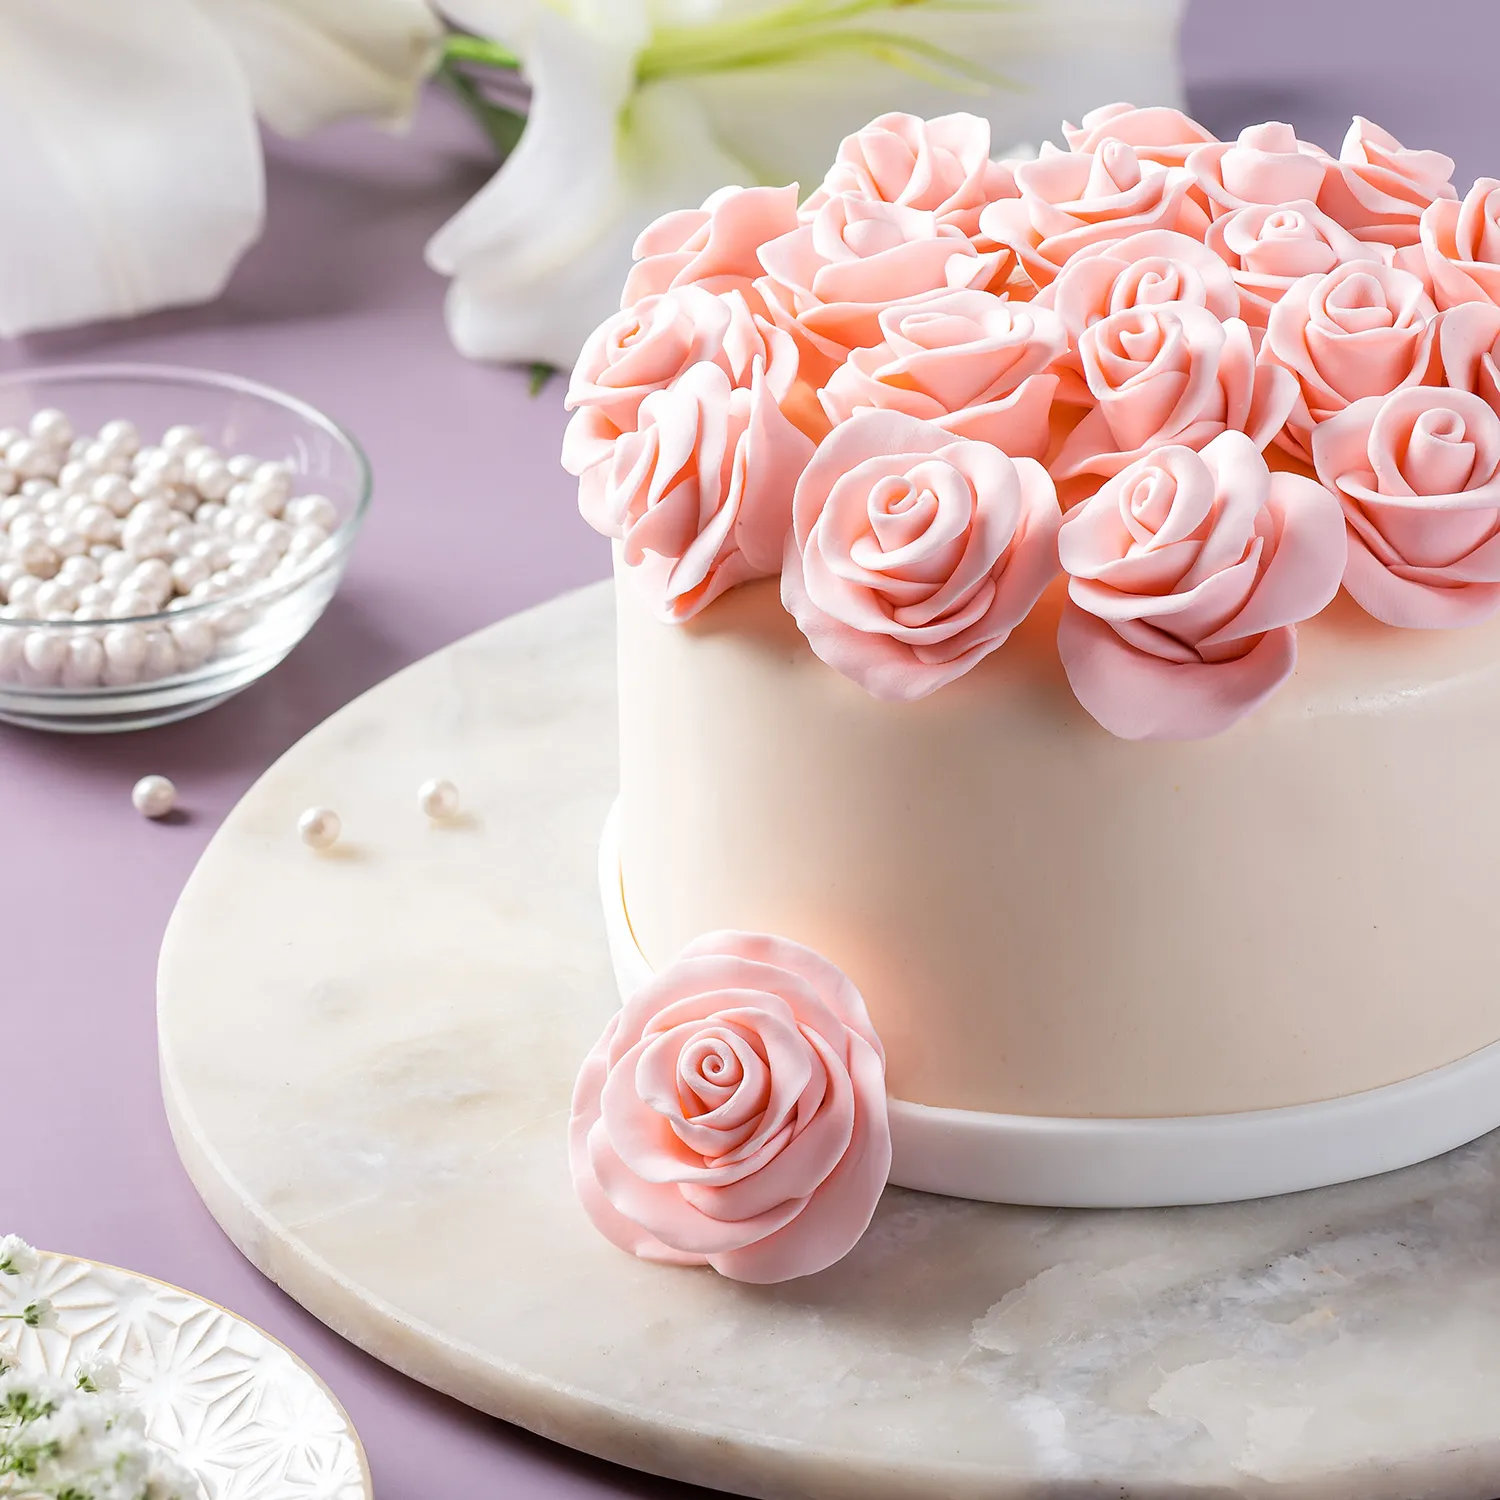 Happy Wedding Anniversary Cake - 1 KG